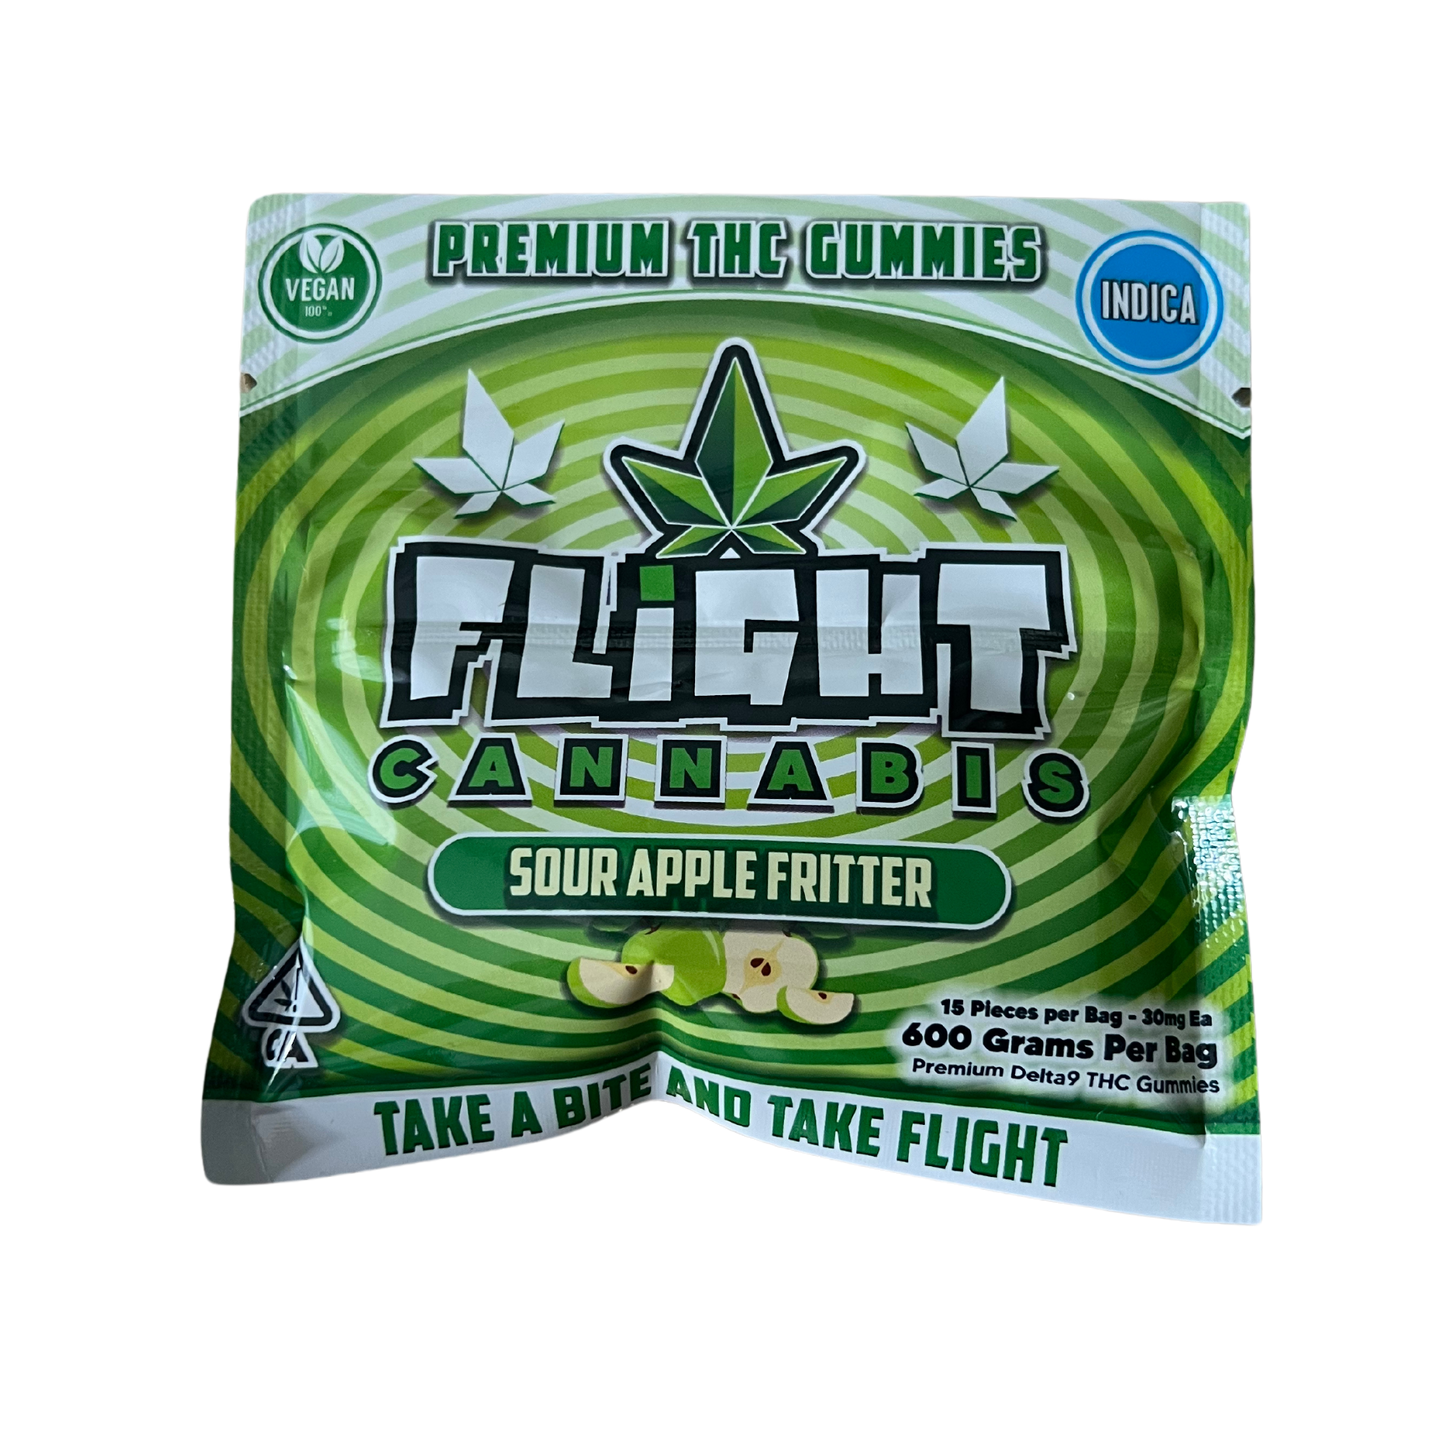 600MG Flight Gummies - Sour Apple Fritter (Indica)